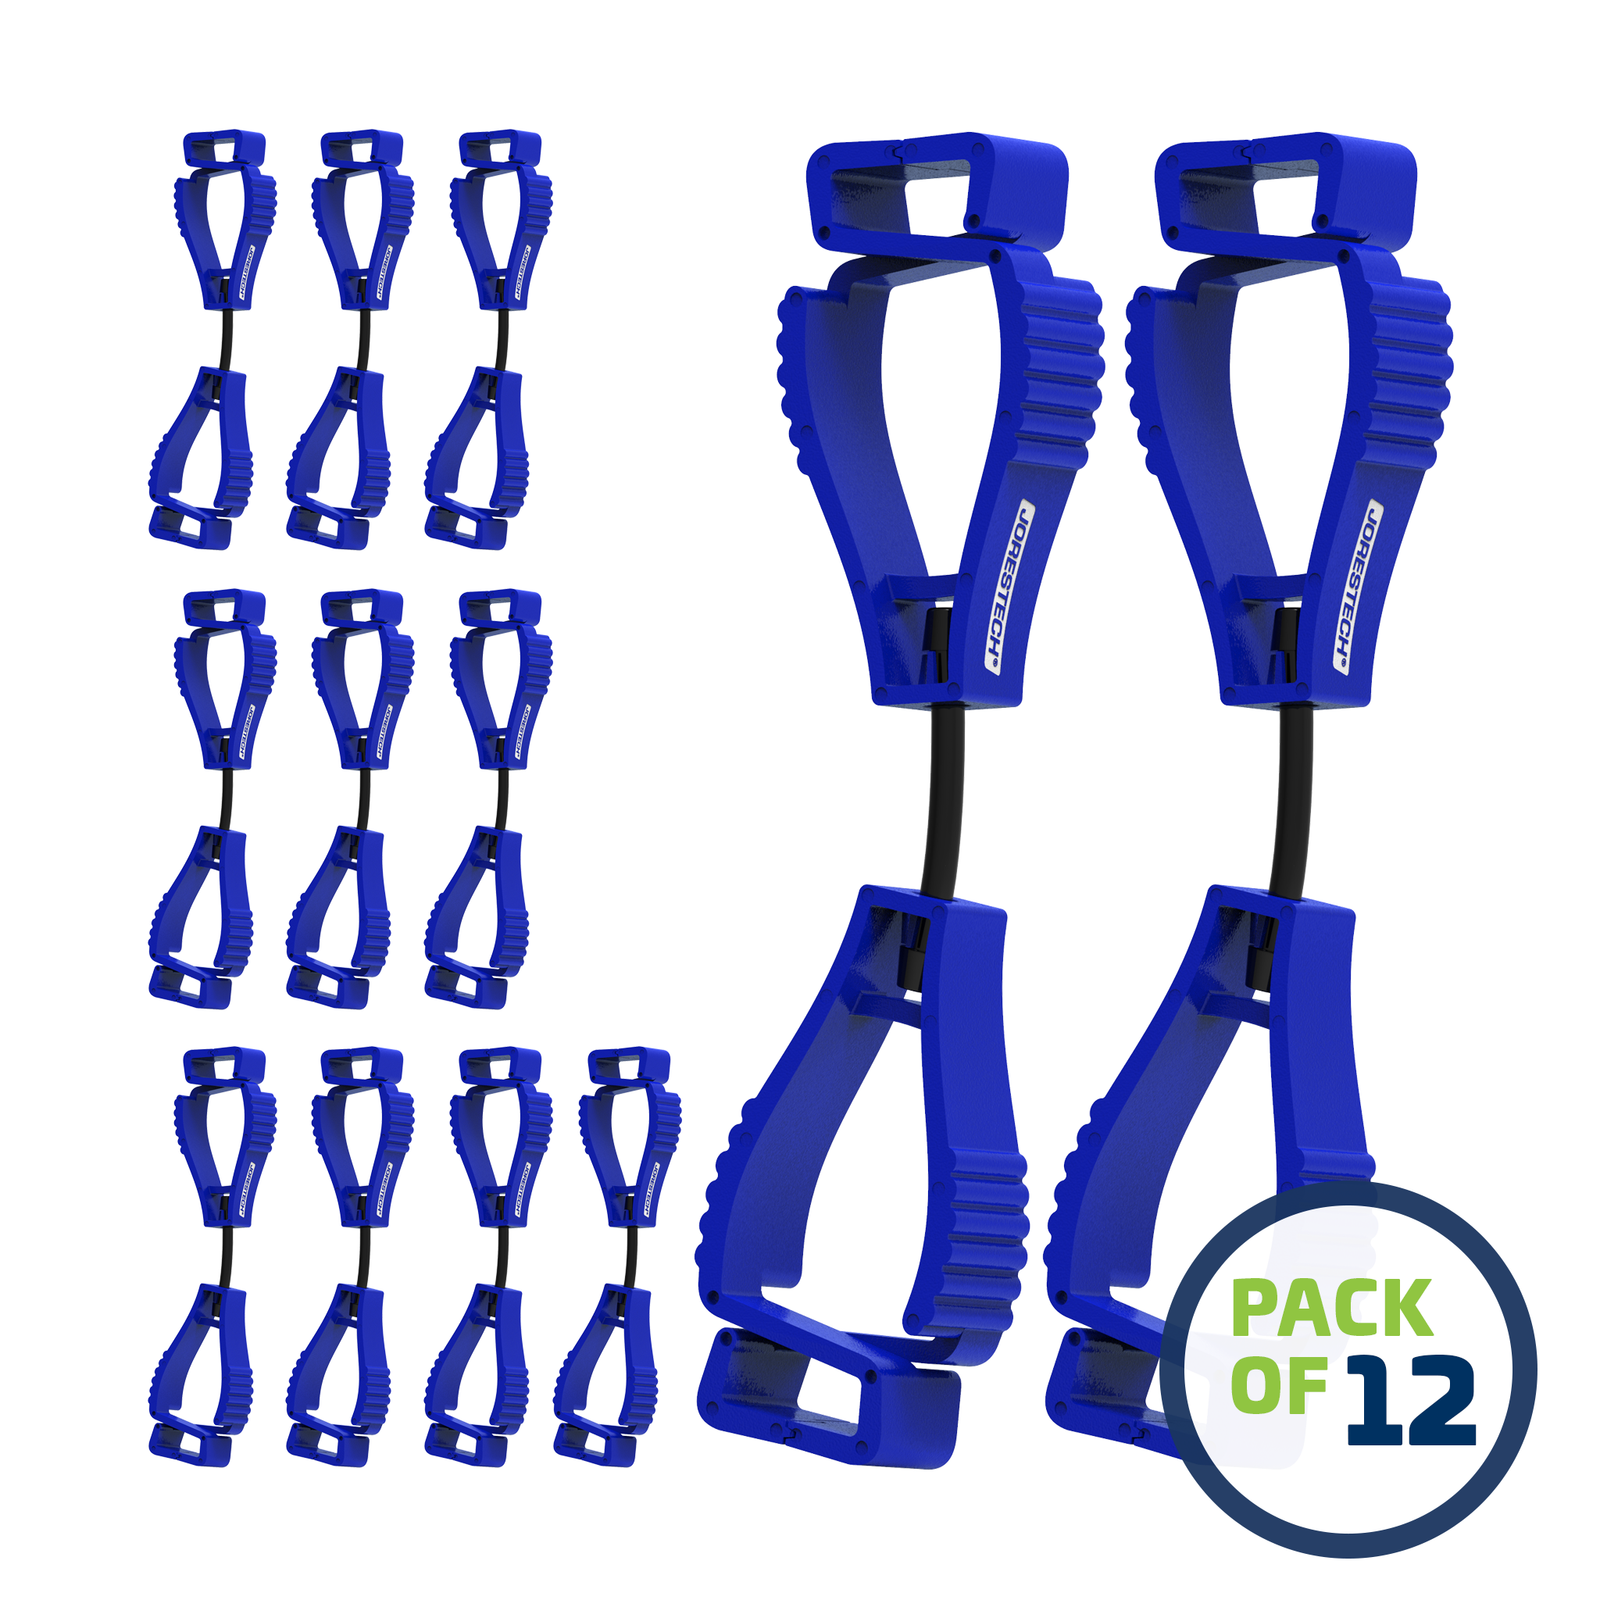 Pack of 12 Blue JORESTECH clip safety holders